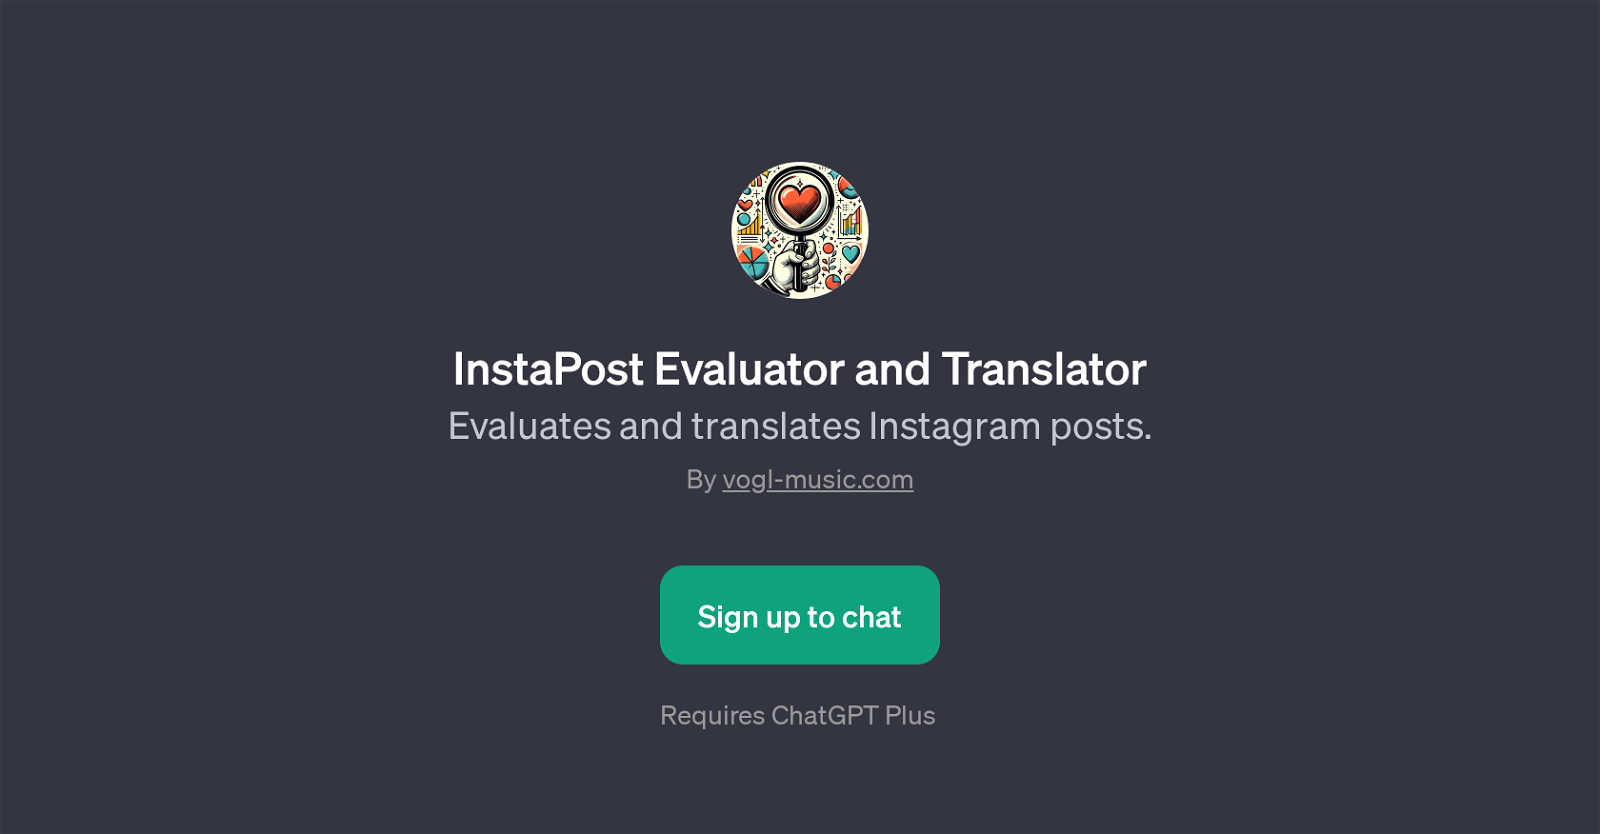 InstaPost Evaluator and Translator website